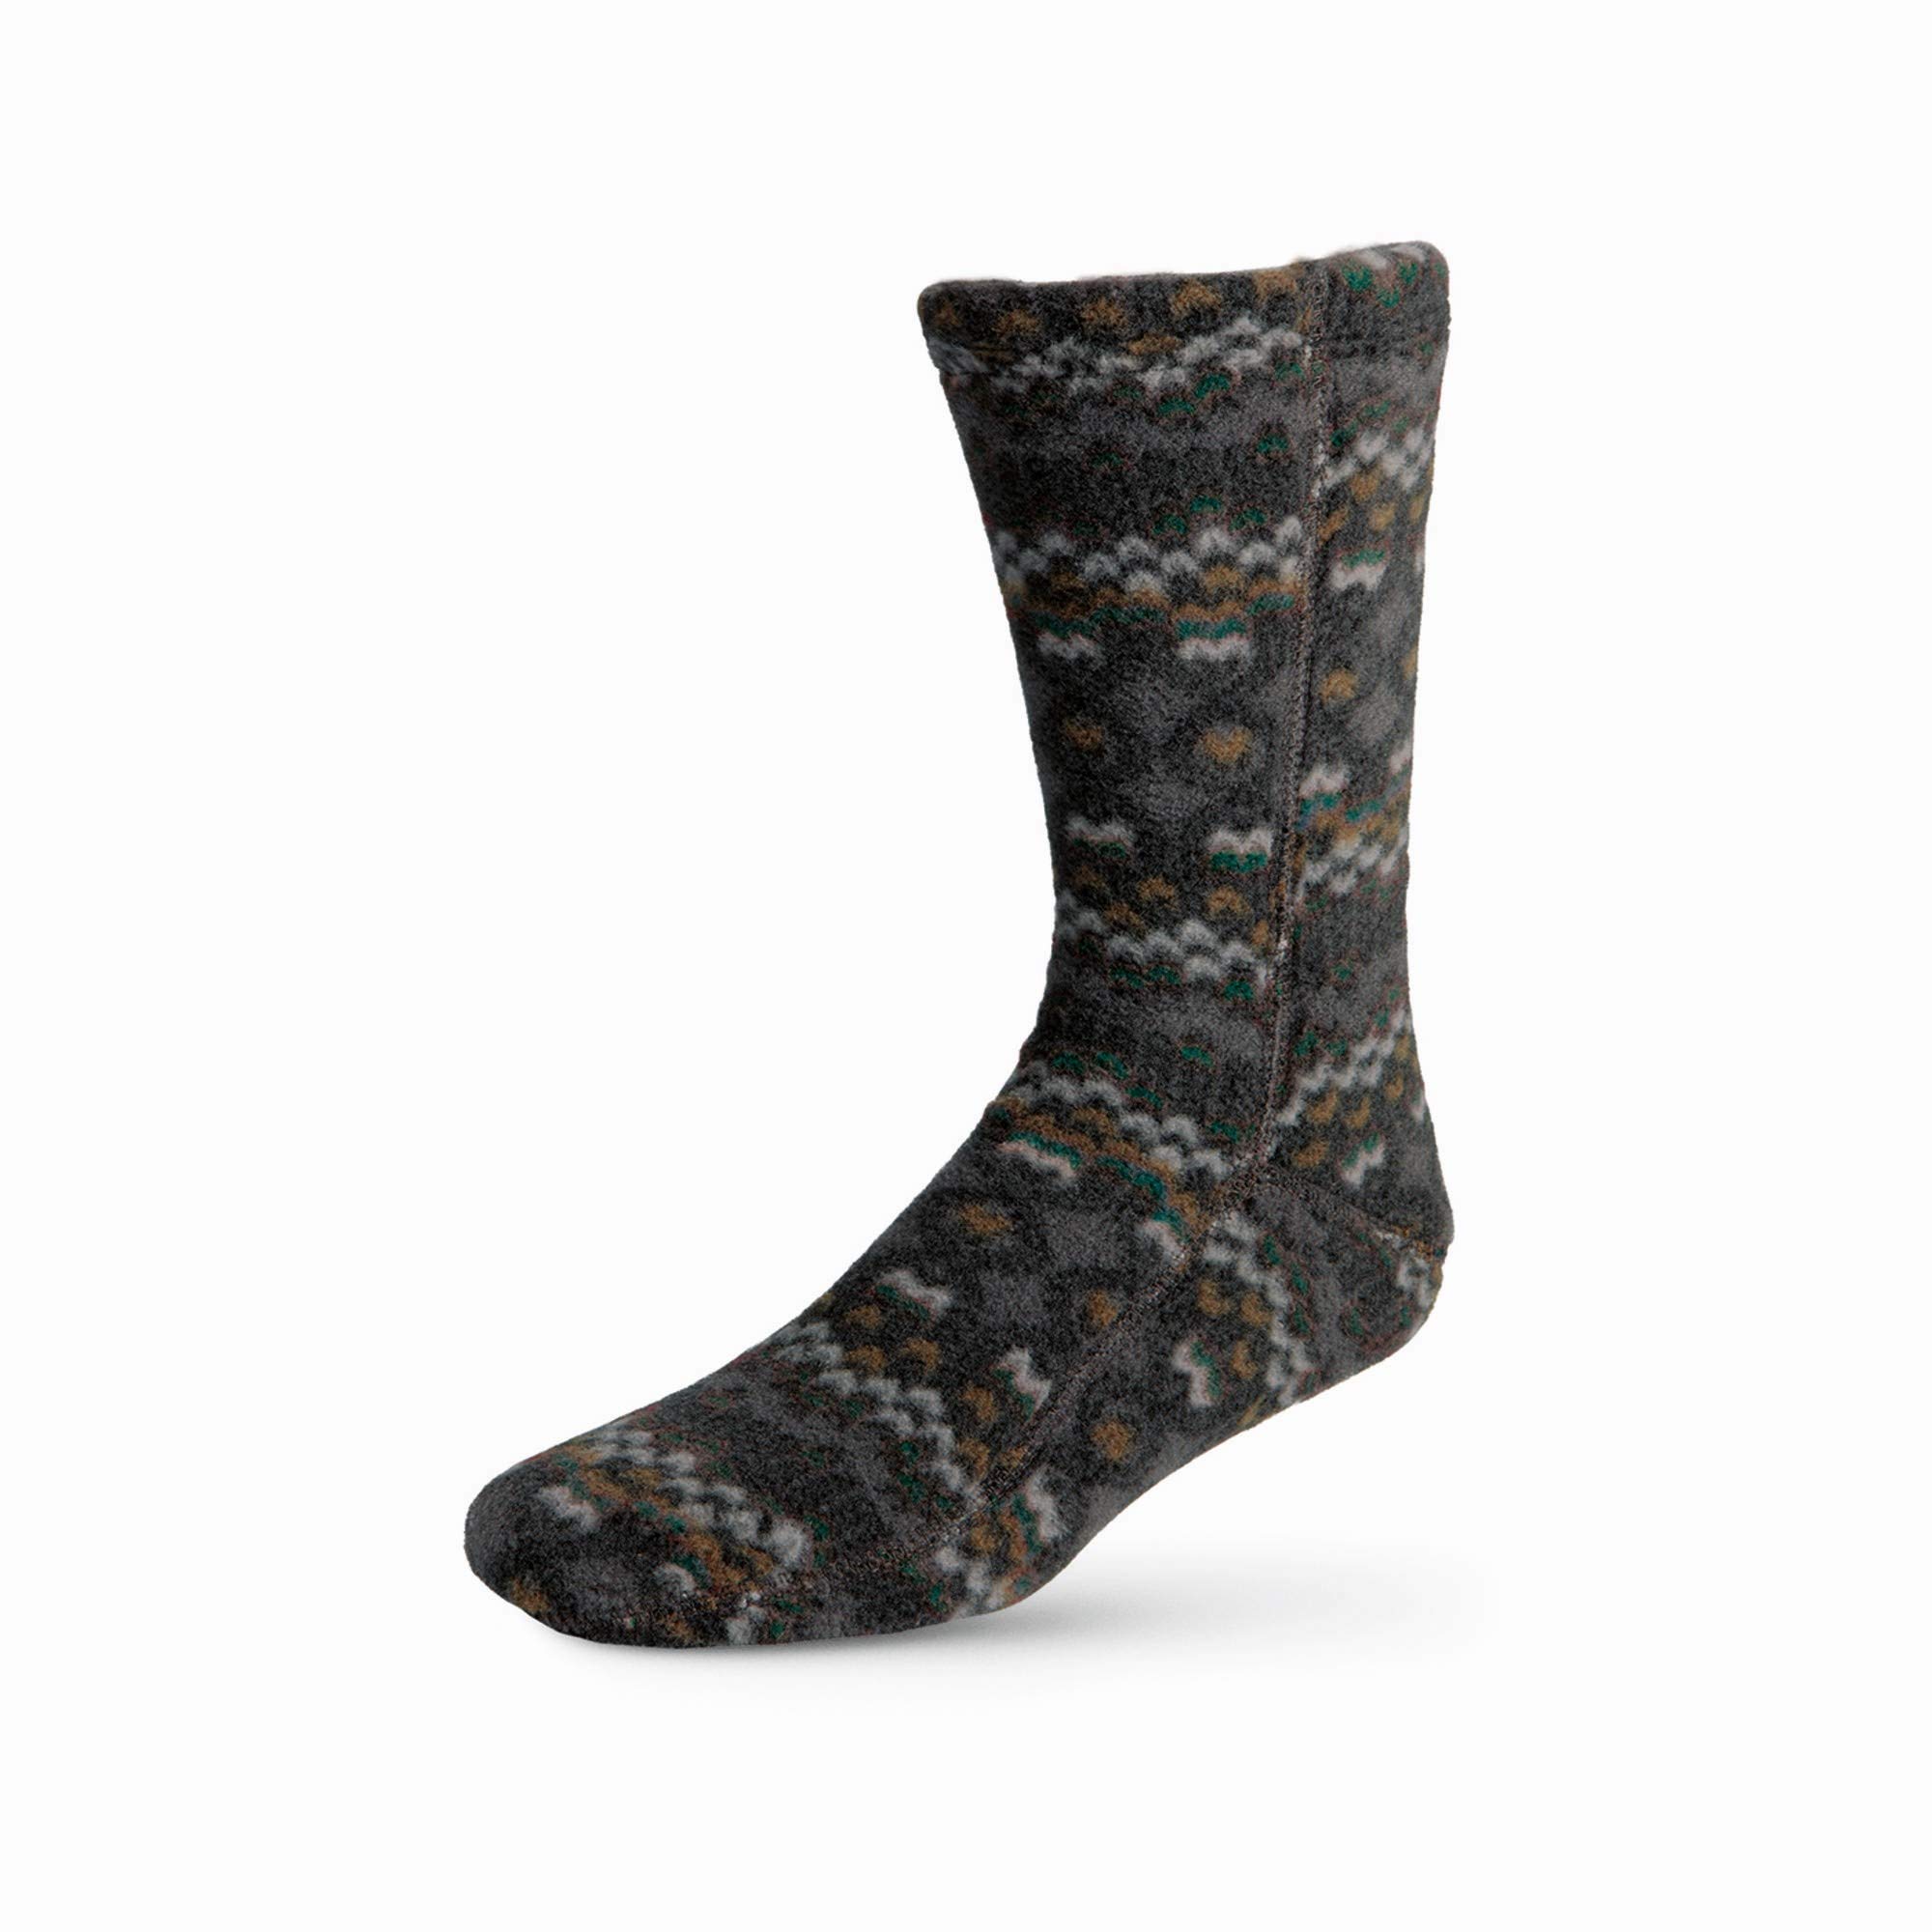 Acorn Unisex Versafit Fleece Sock, Warm, Breathable and Moisture Wicking, Mid-Calf Length